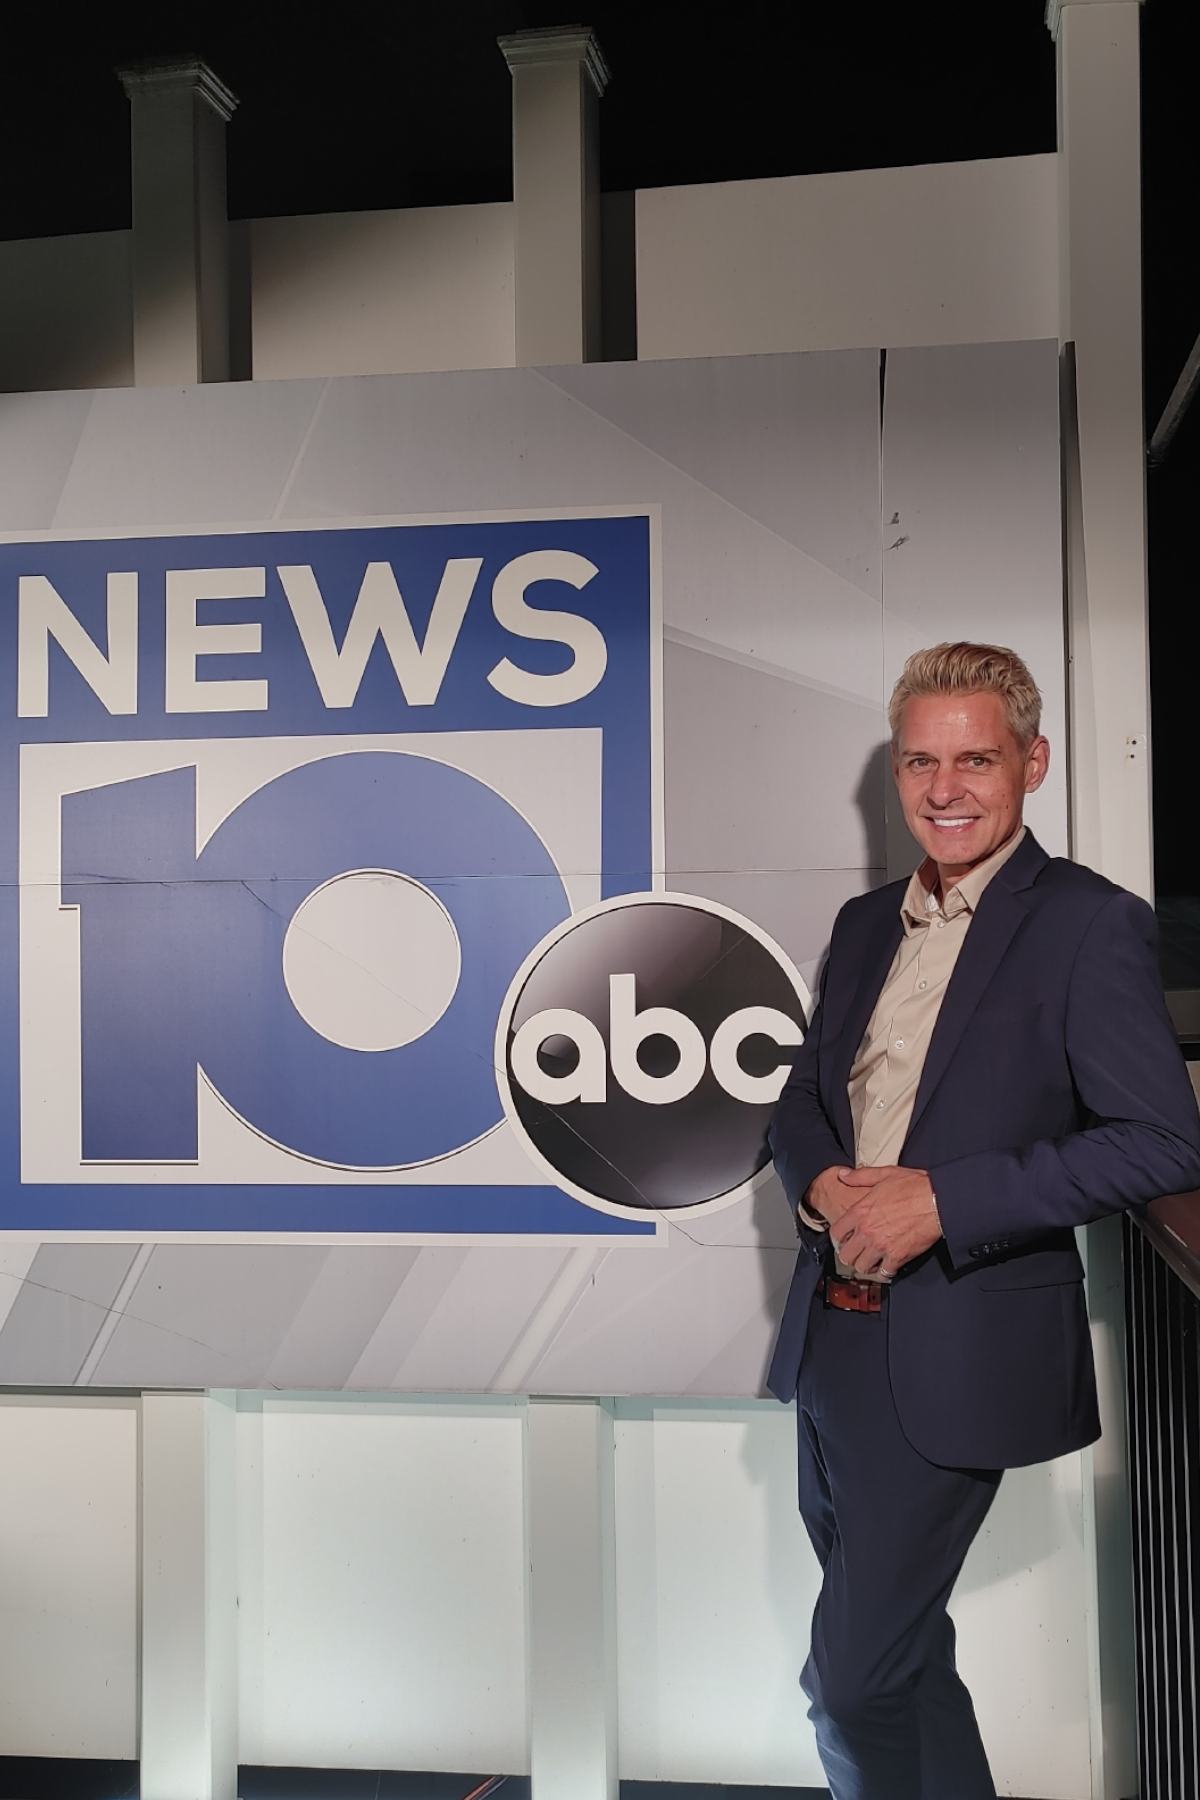 James De La Fuente smiling, standing in front of NEWS10 ABC logo